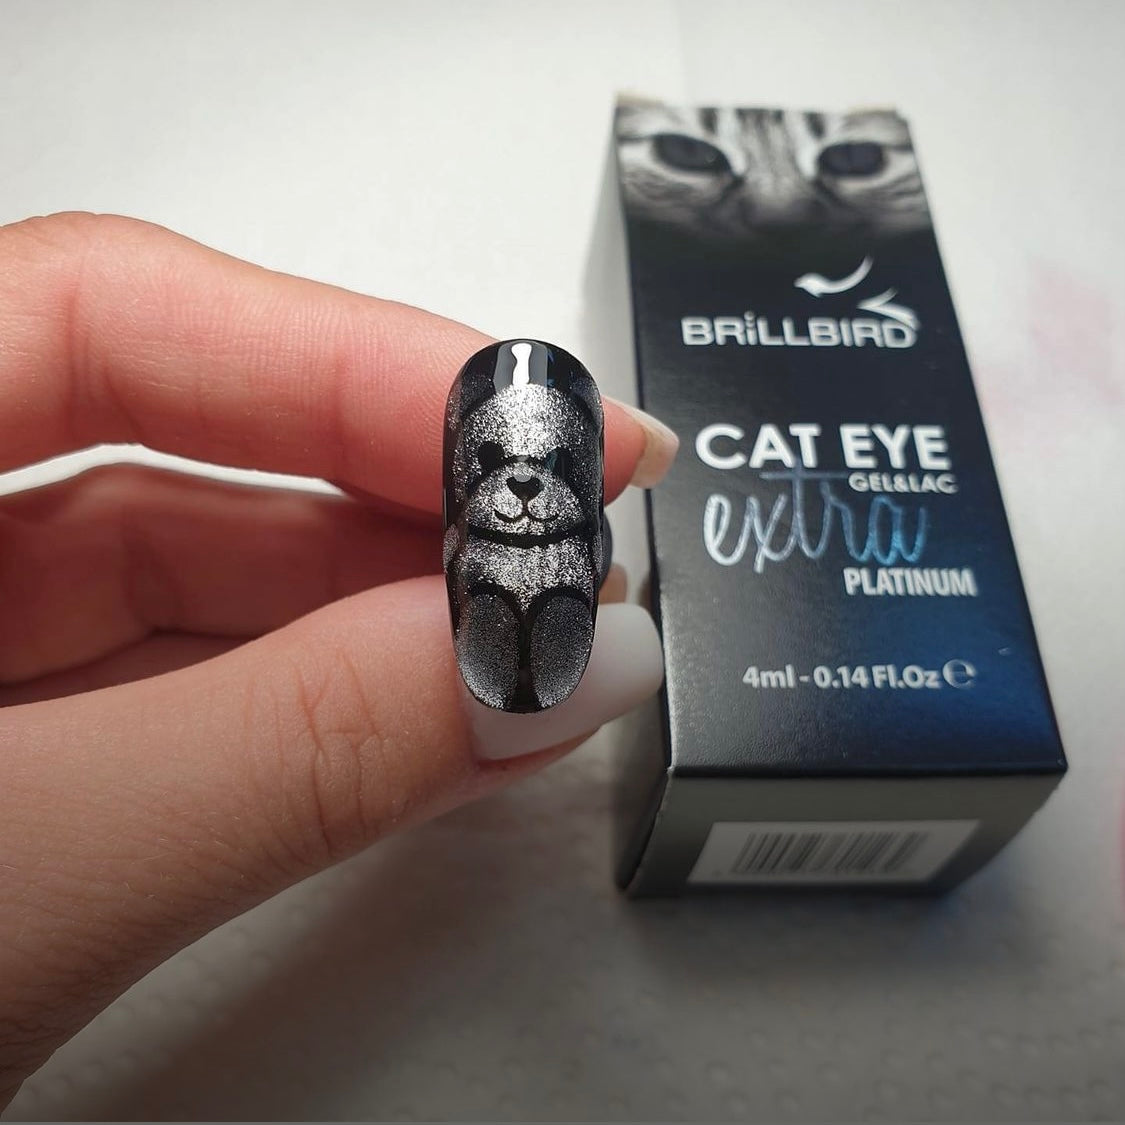 Cat eye extra - Platinum